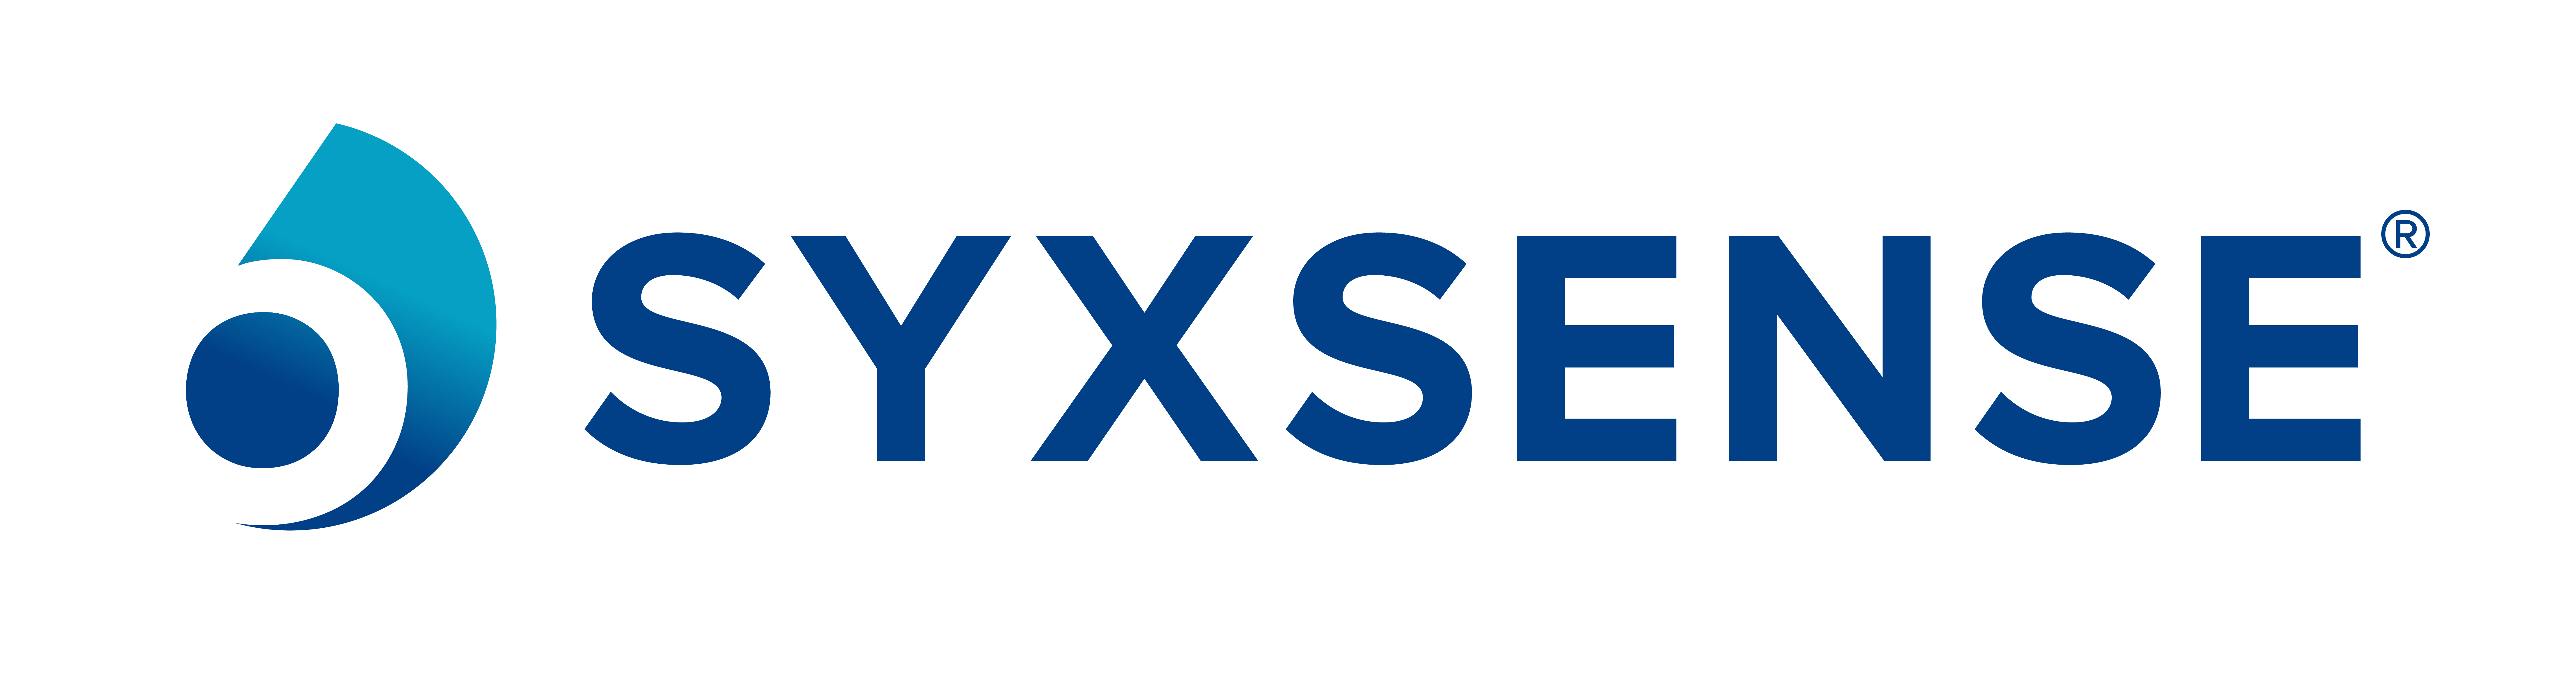 Syxsense logo-R_Horizontal_Blue_RGB (1)